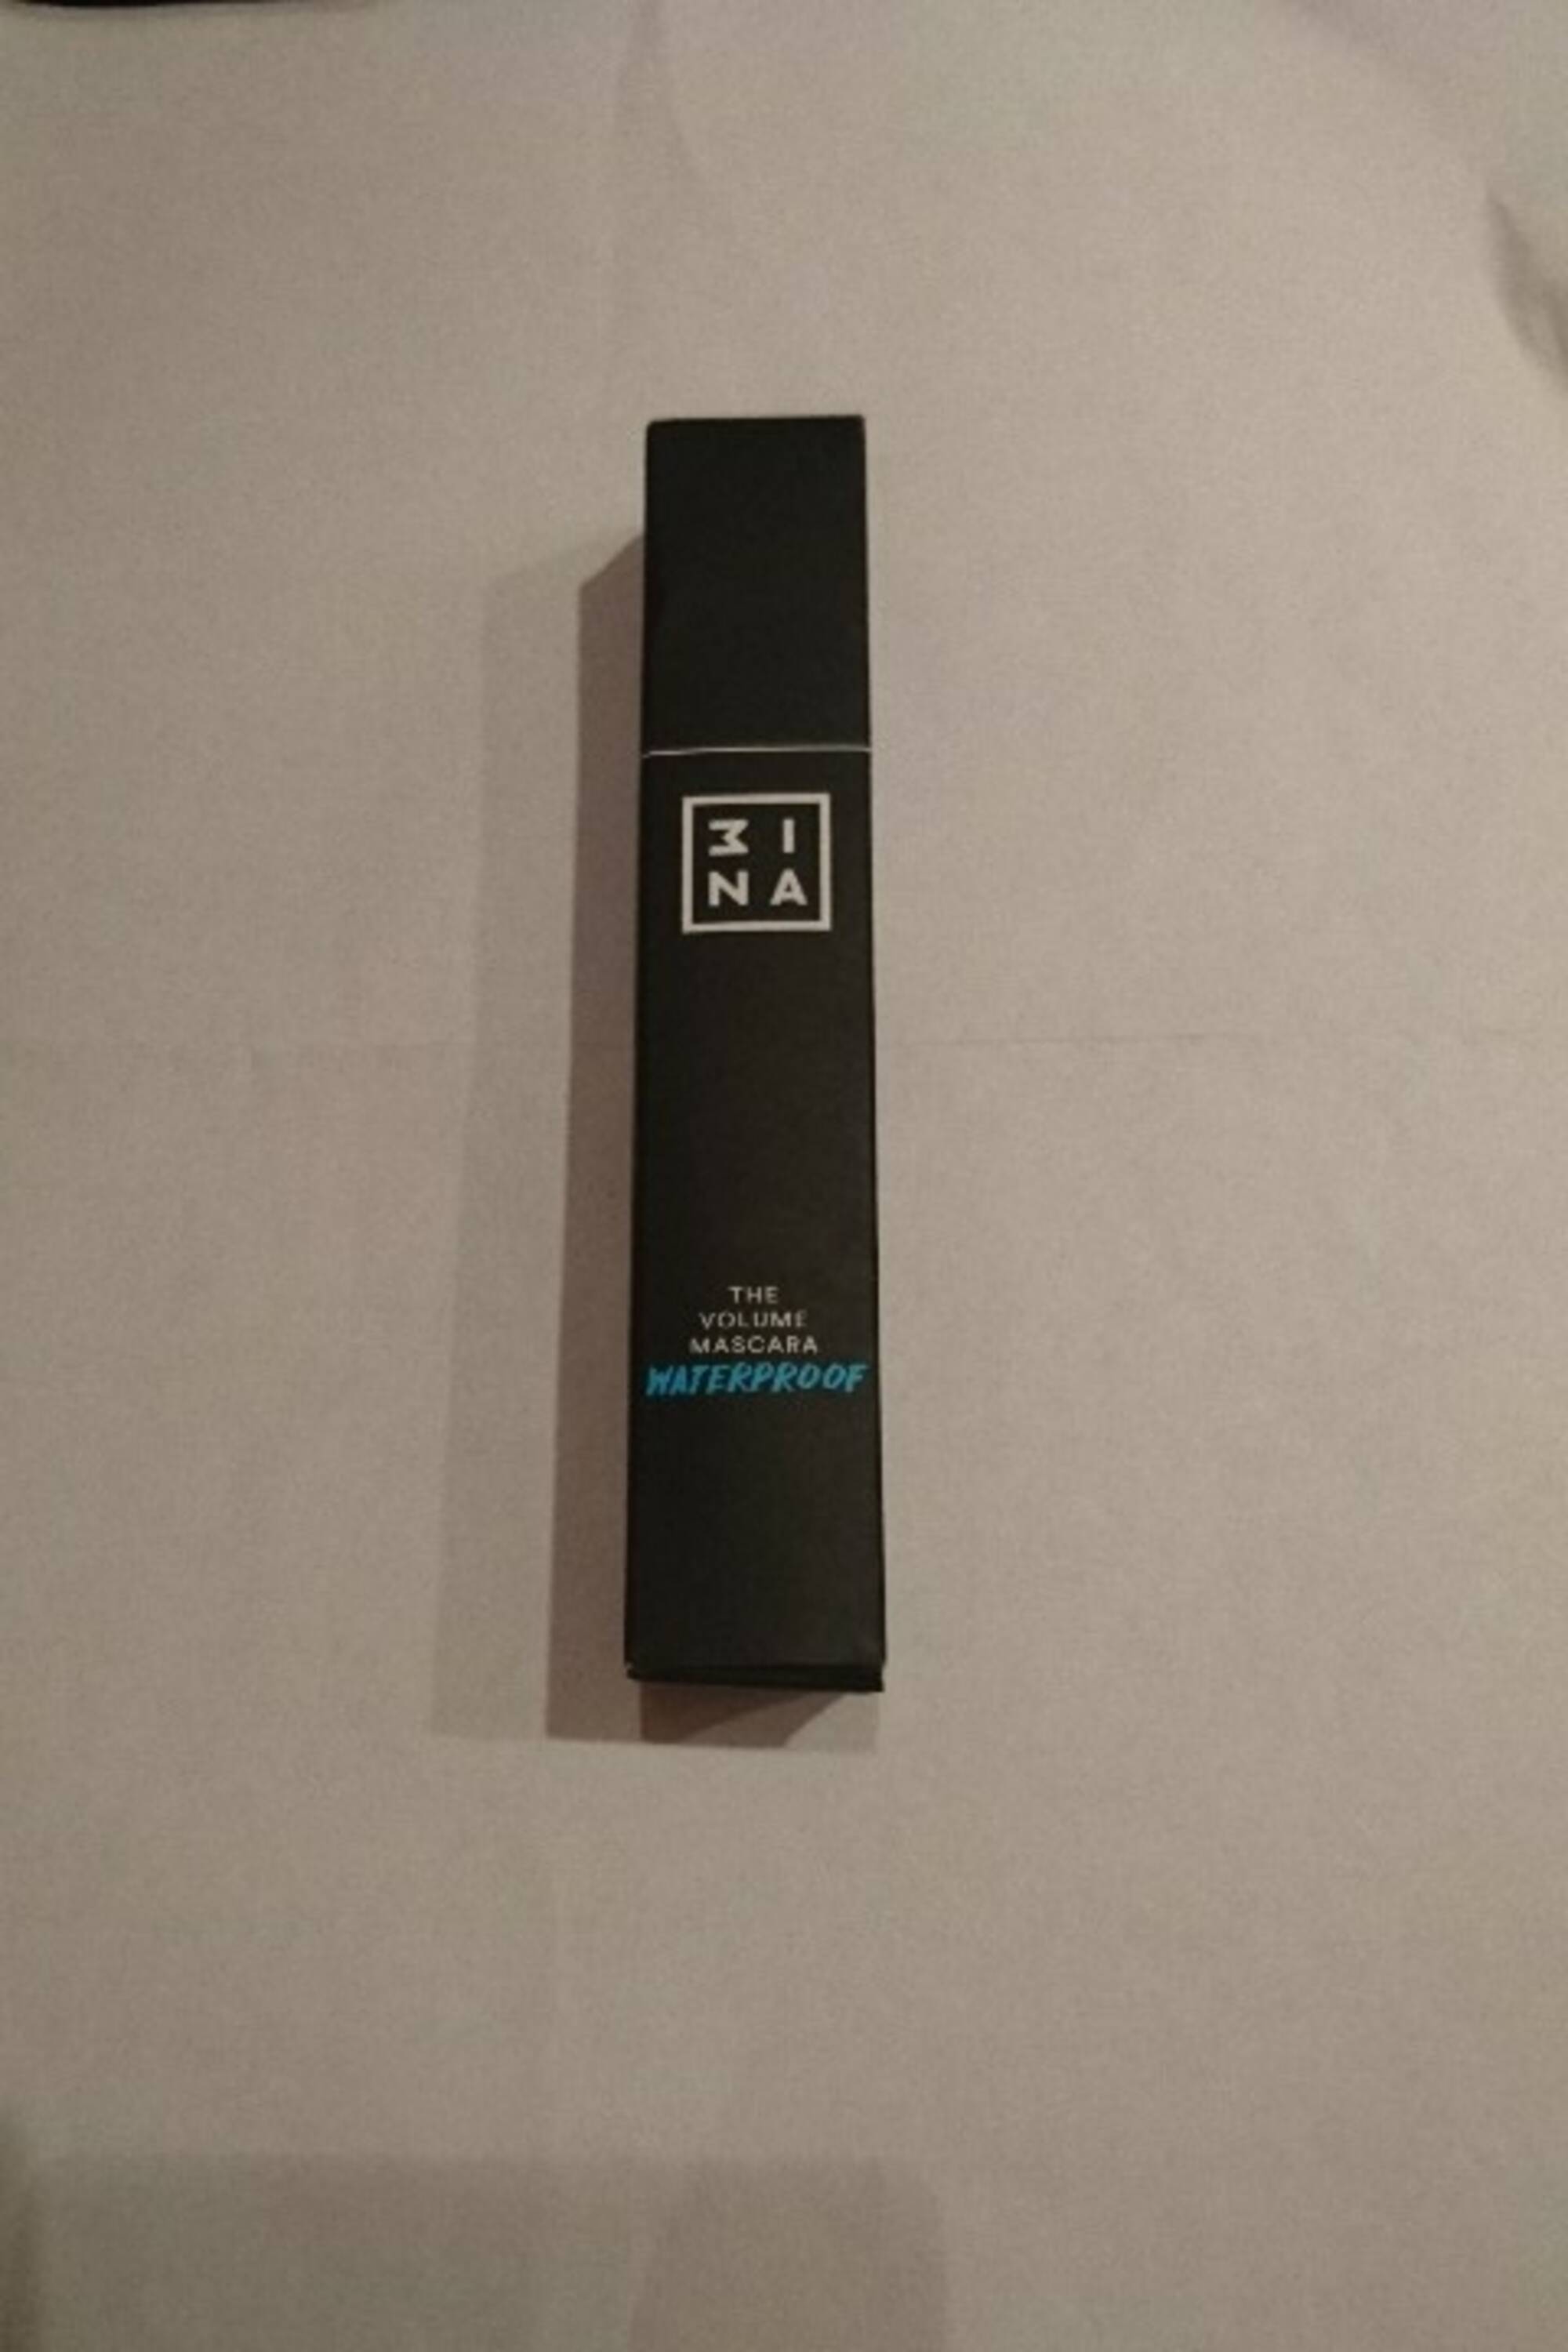 3INA - The volume mascara waterproof